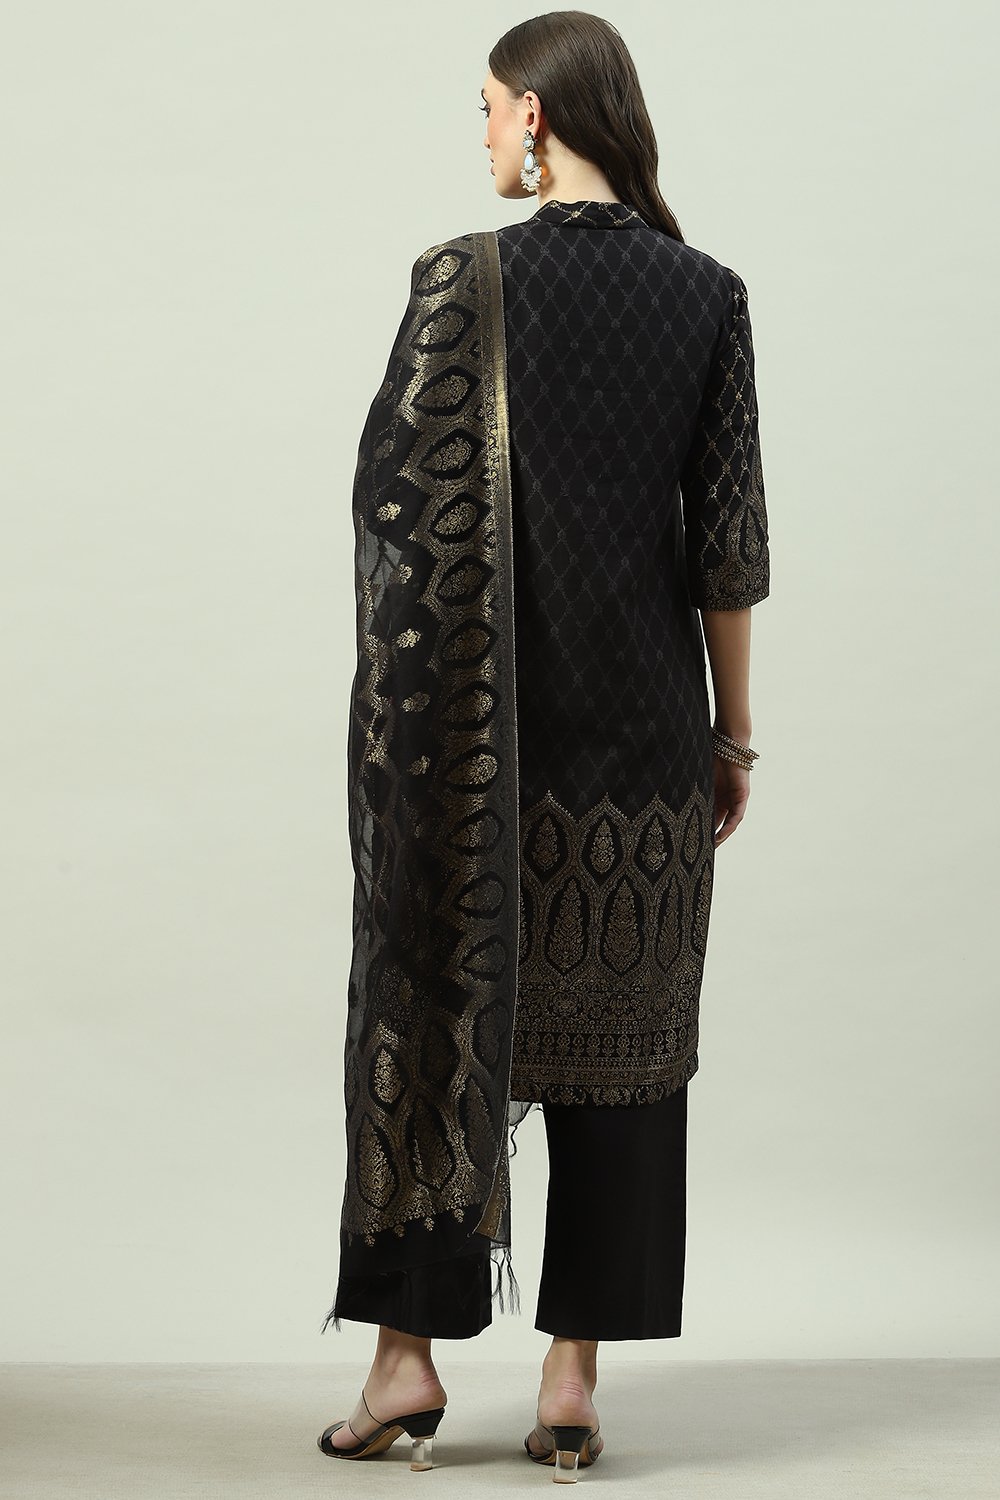 Buy Black Art Silk Straight Kurta Palazzo Suit Set for INR7975.00 |Biba ...